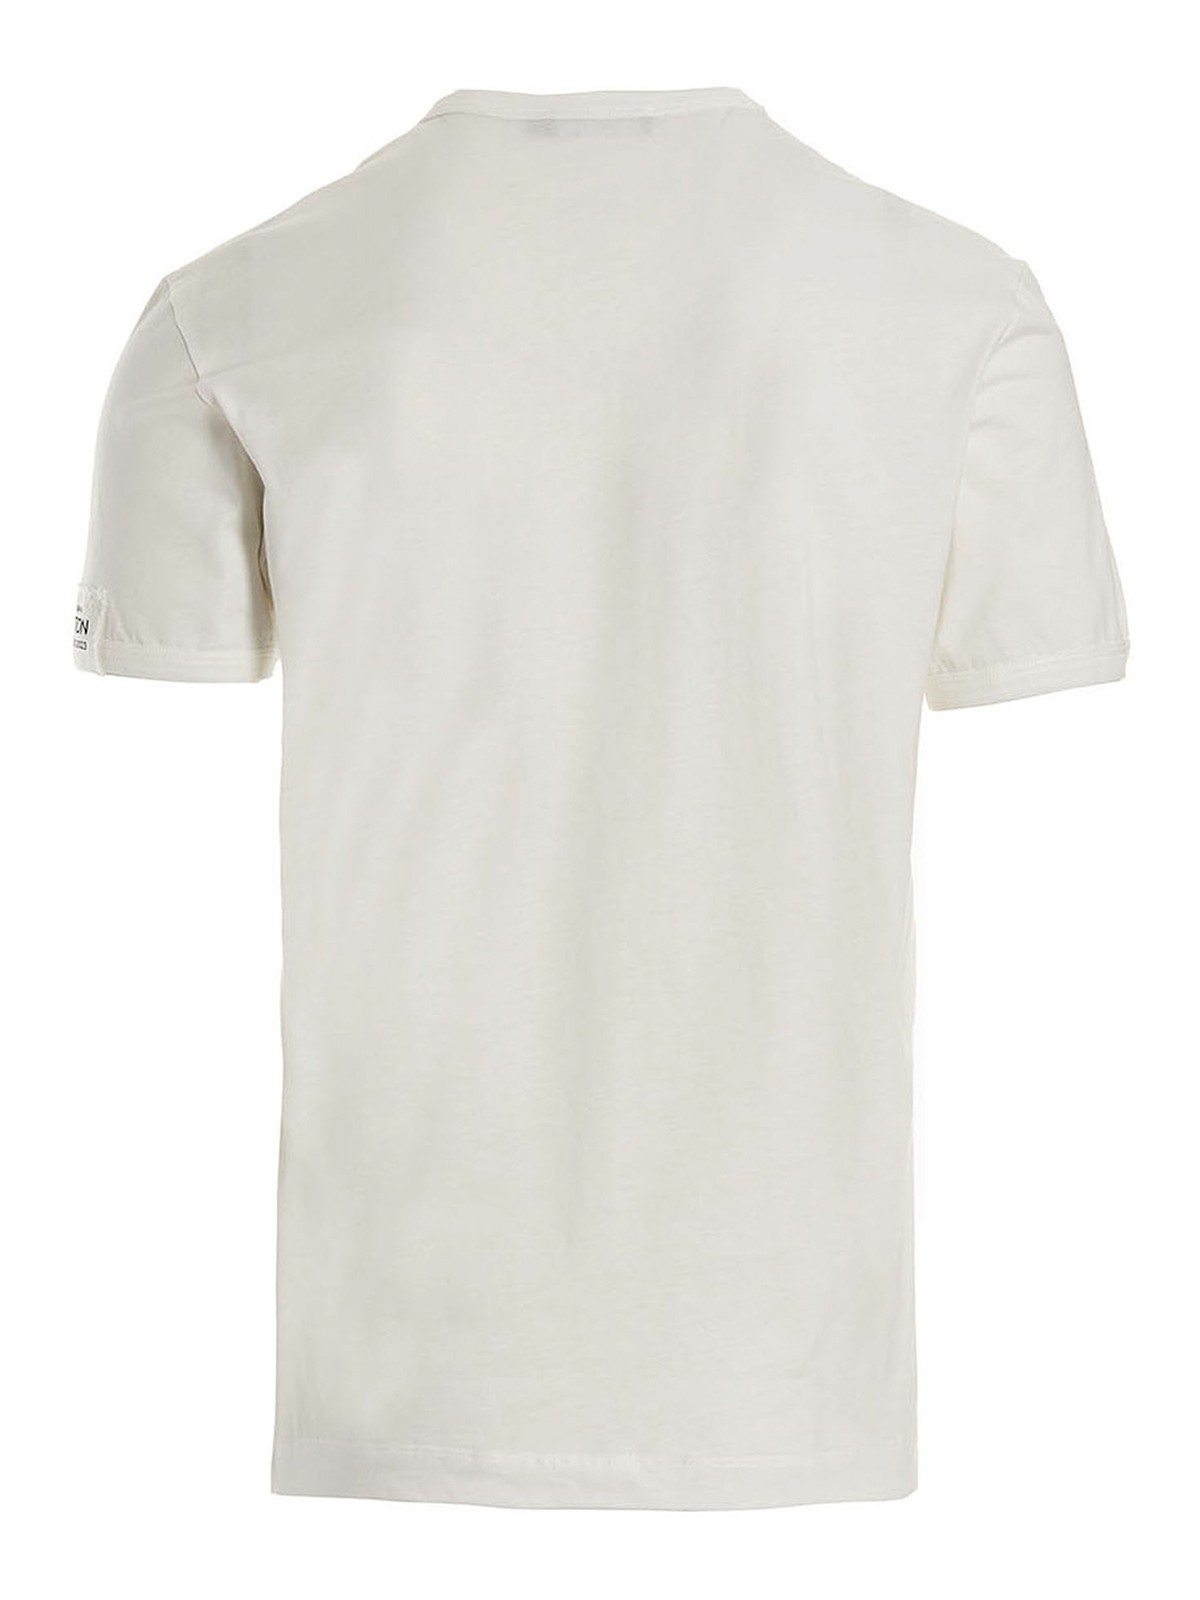 Shop Dolce & Gabbana Re-edition 2006 Cotton T-shirt In Blanco